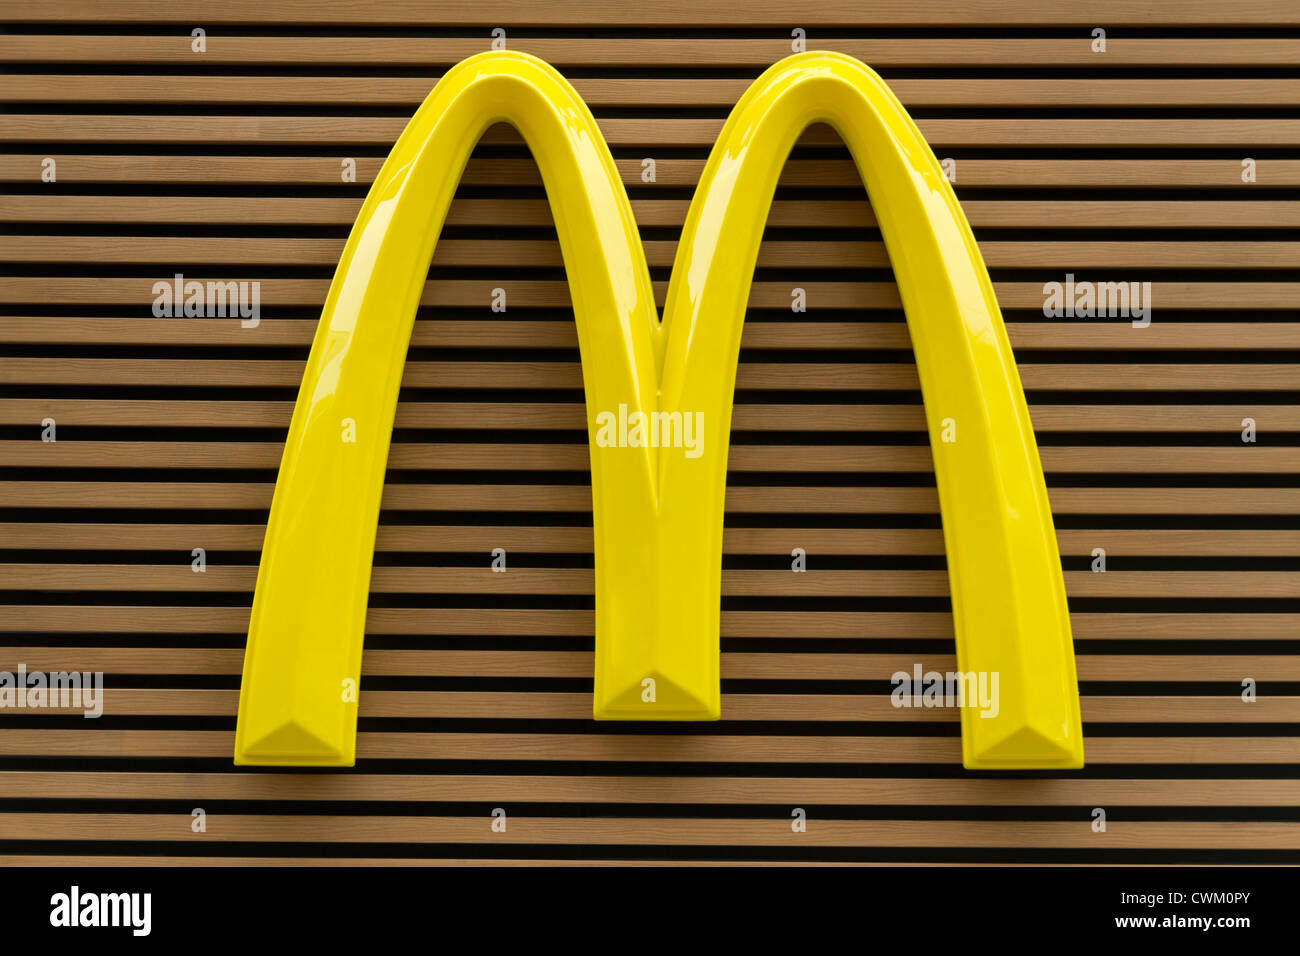 McDonald's restaurant sign Stock Photo